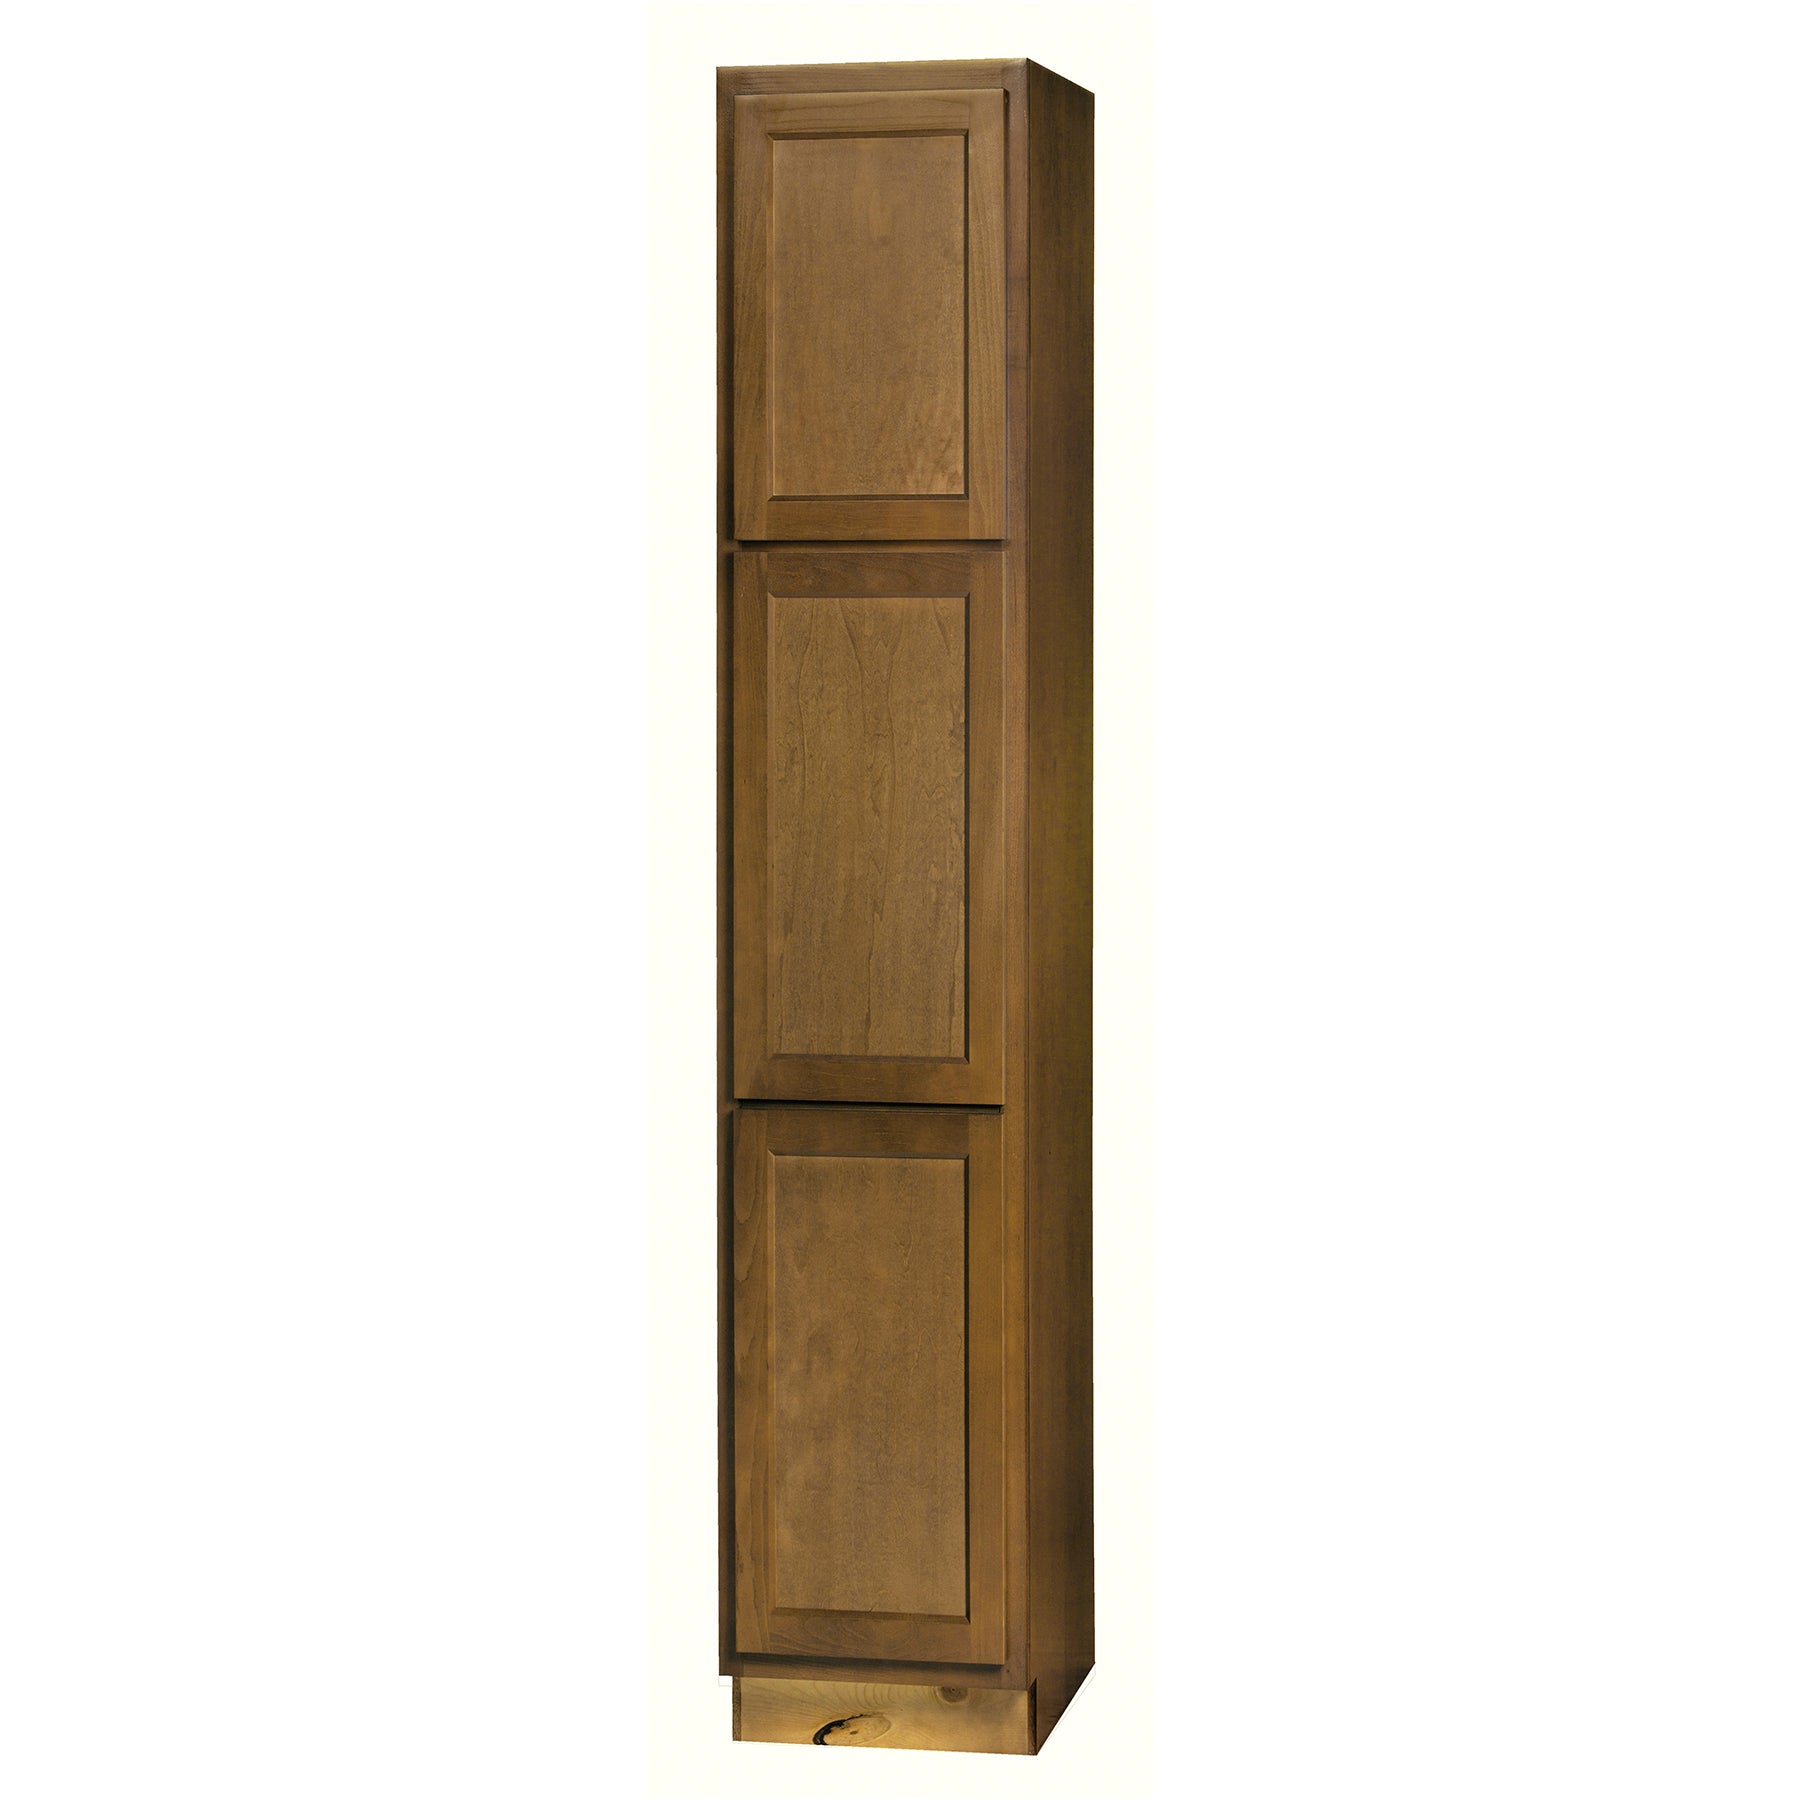 90 inch High Broom Cabinet - Warmwood Shaker - 18 Inch W x 90 Inch H x 12 Inch D